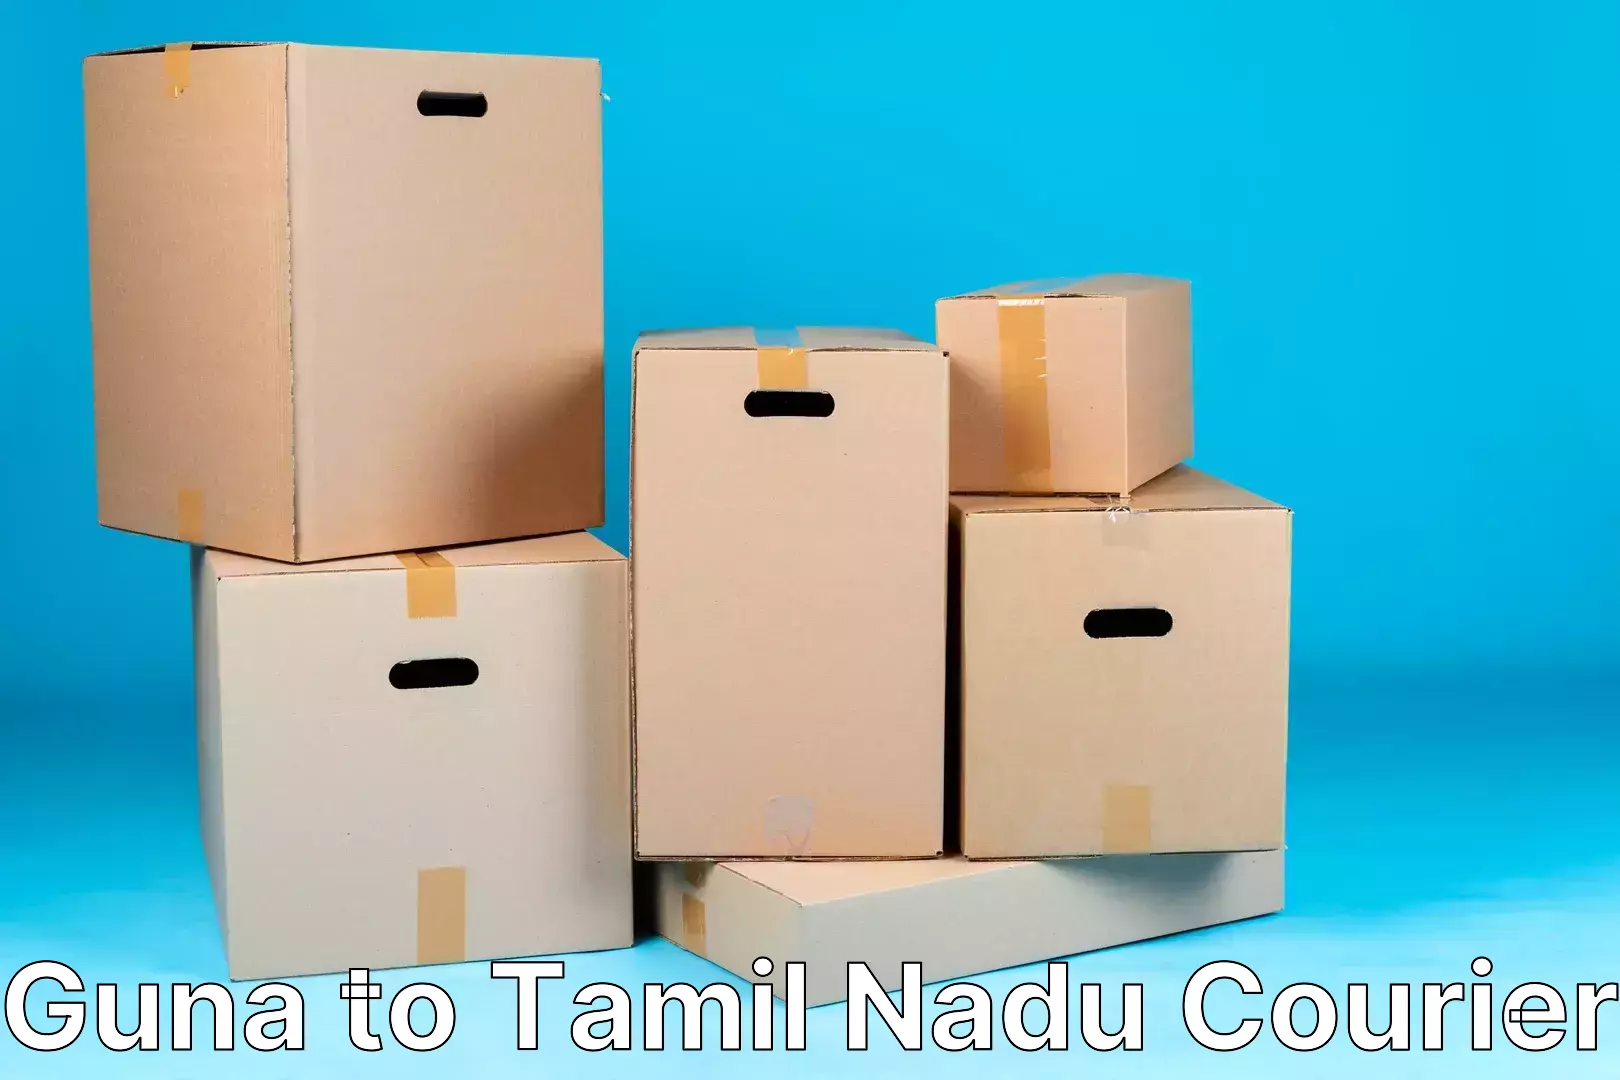 Courier service partnerships Guna to Tamil Nadu